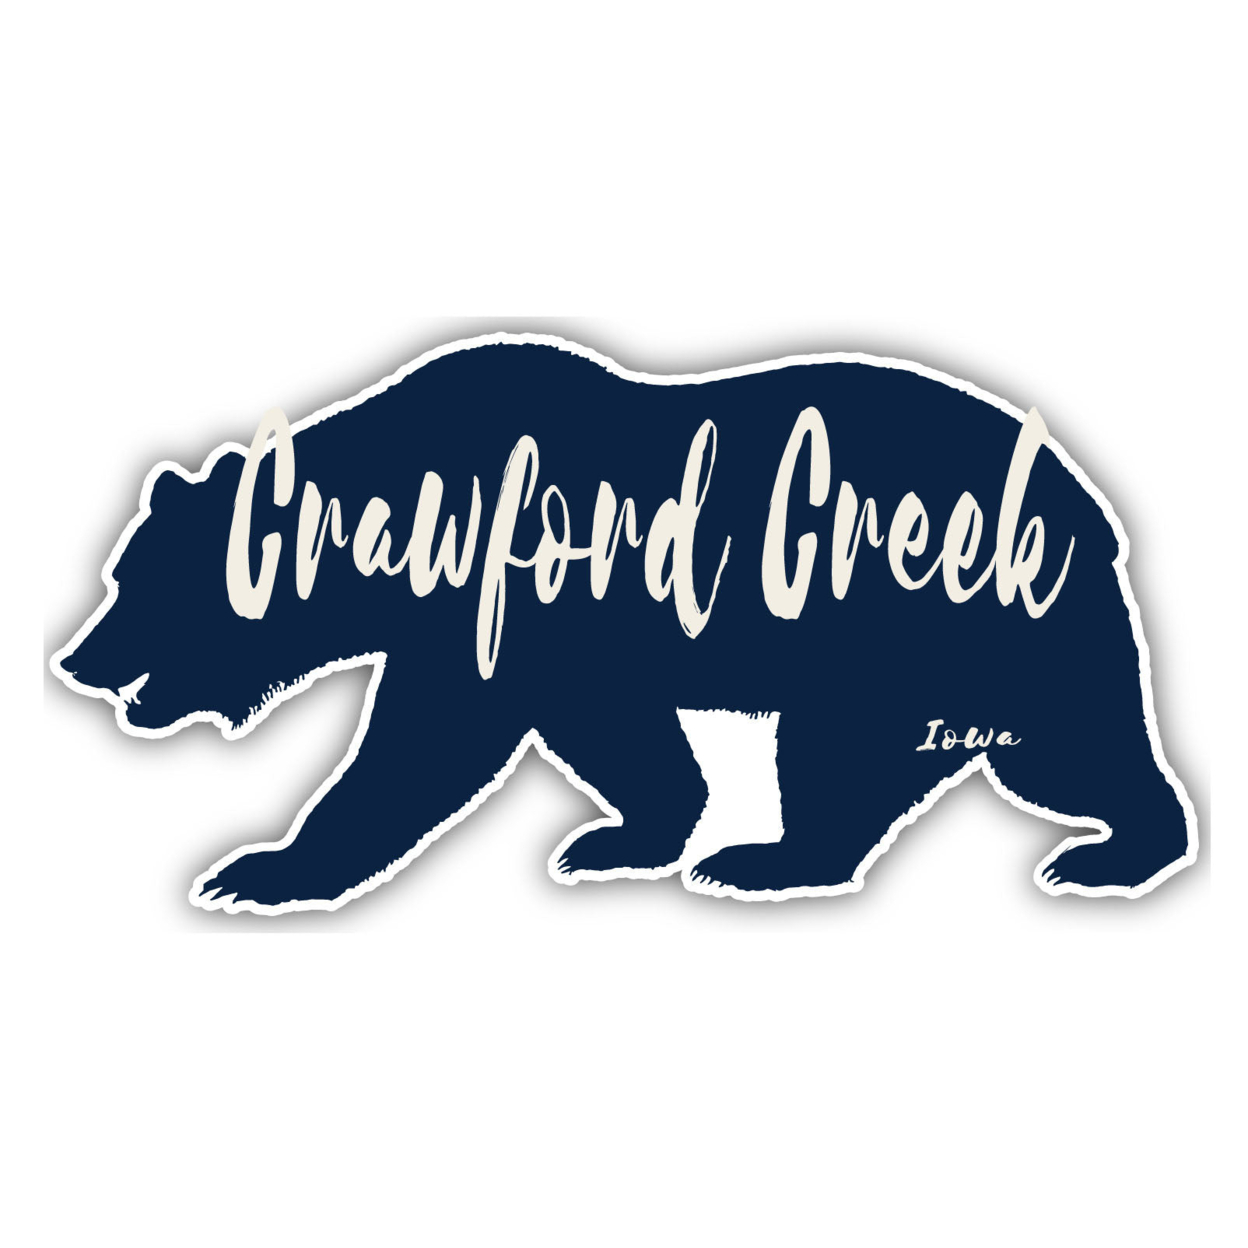 Crawford Creek Iowa Souvenir Decorative Stickers (Choose Theme And Size) - 4-Pack, 12-Inch, Bear